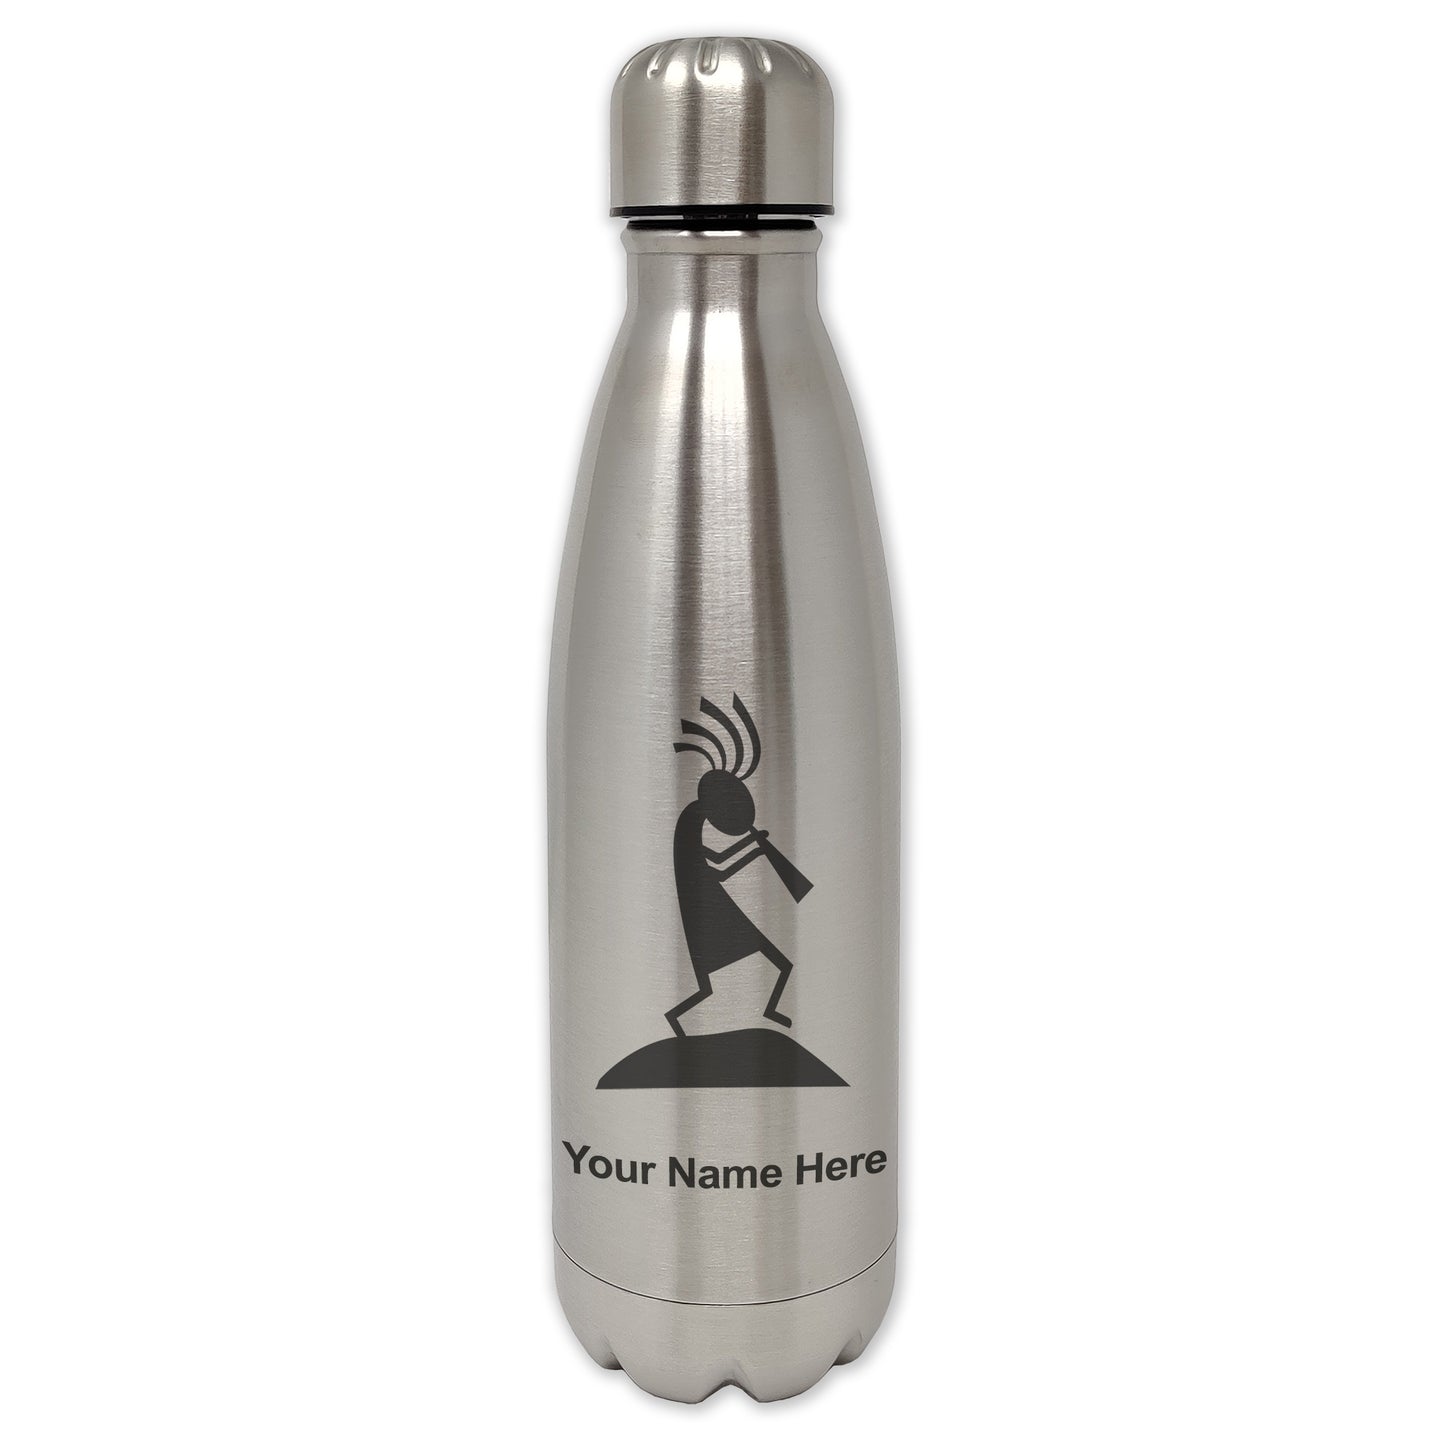 LaserGram Double Wall Water Bottle, Kokopelli, Personalized Engraving Included